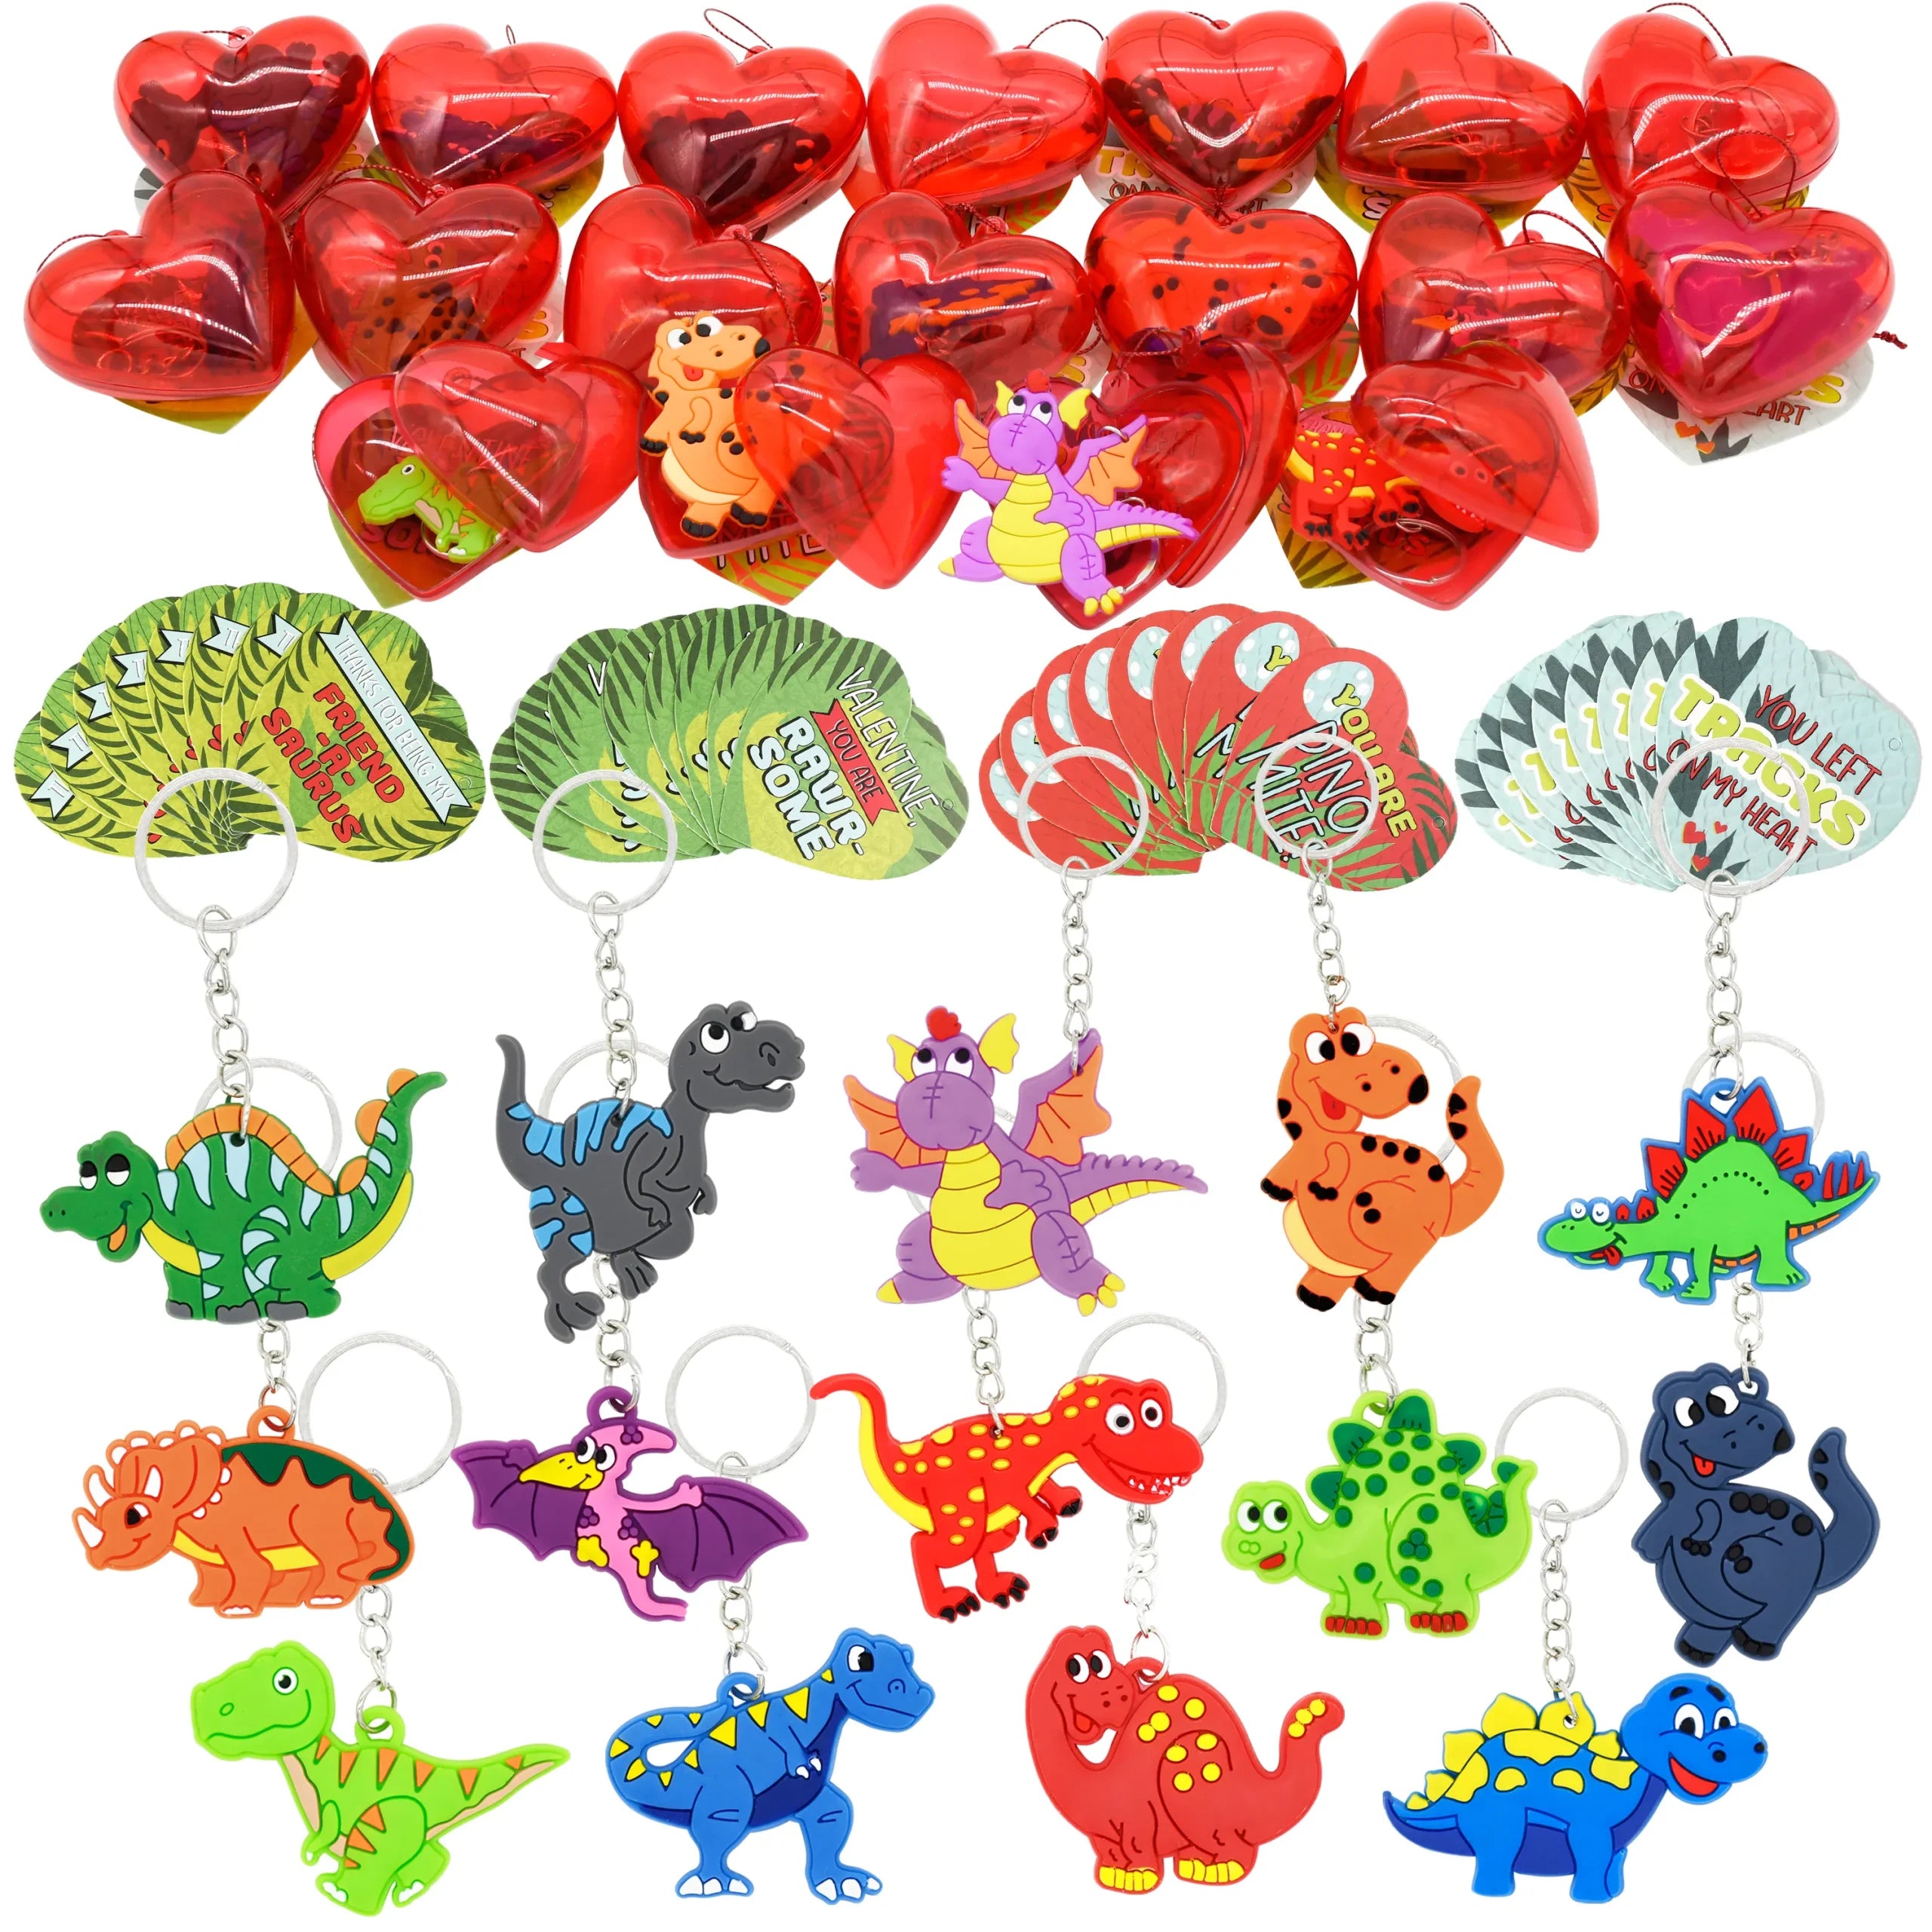 JOYIN 28 Packs Unicorn Dinosaur Keychain with Cards for Kids Party Favor, Classroom Exchange Prizes, Valentine